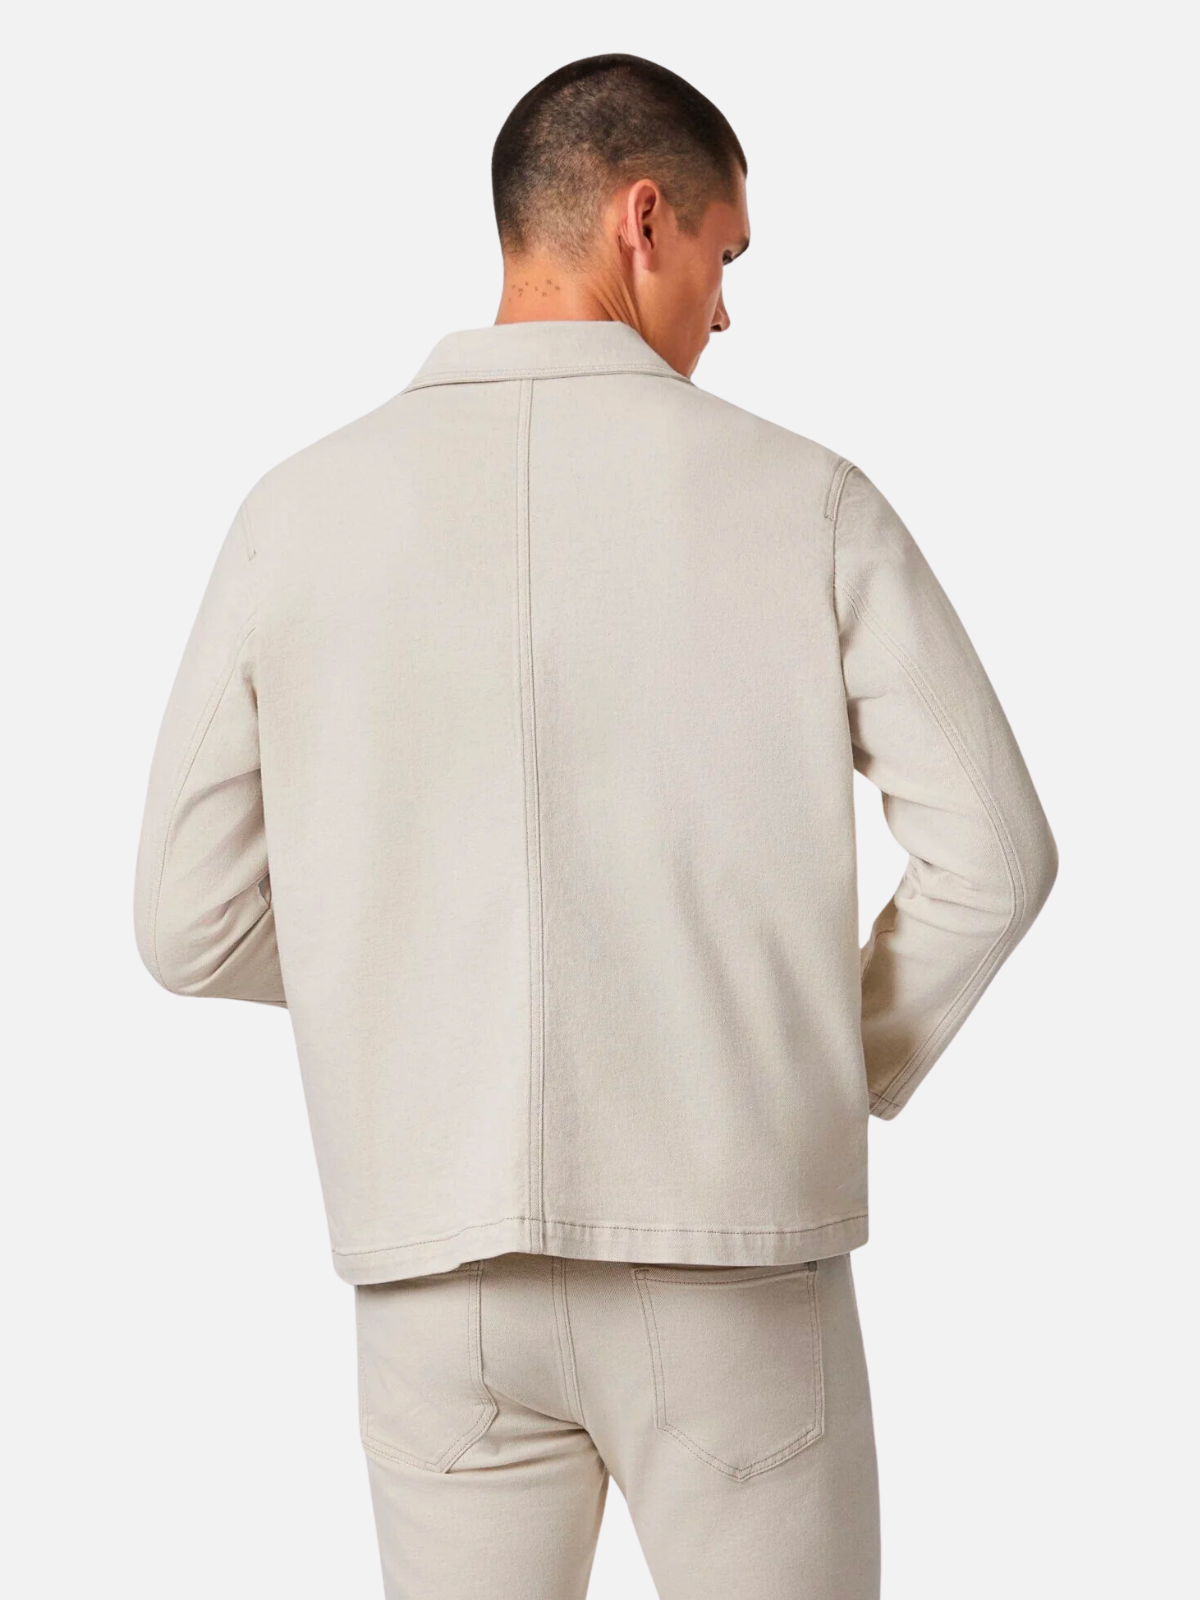 mavi victor denim jacket undyed cotton lyocell spandex chore jacket ecru natural sustainable kempt athens ga georgia men's clothing store